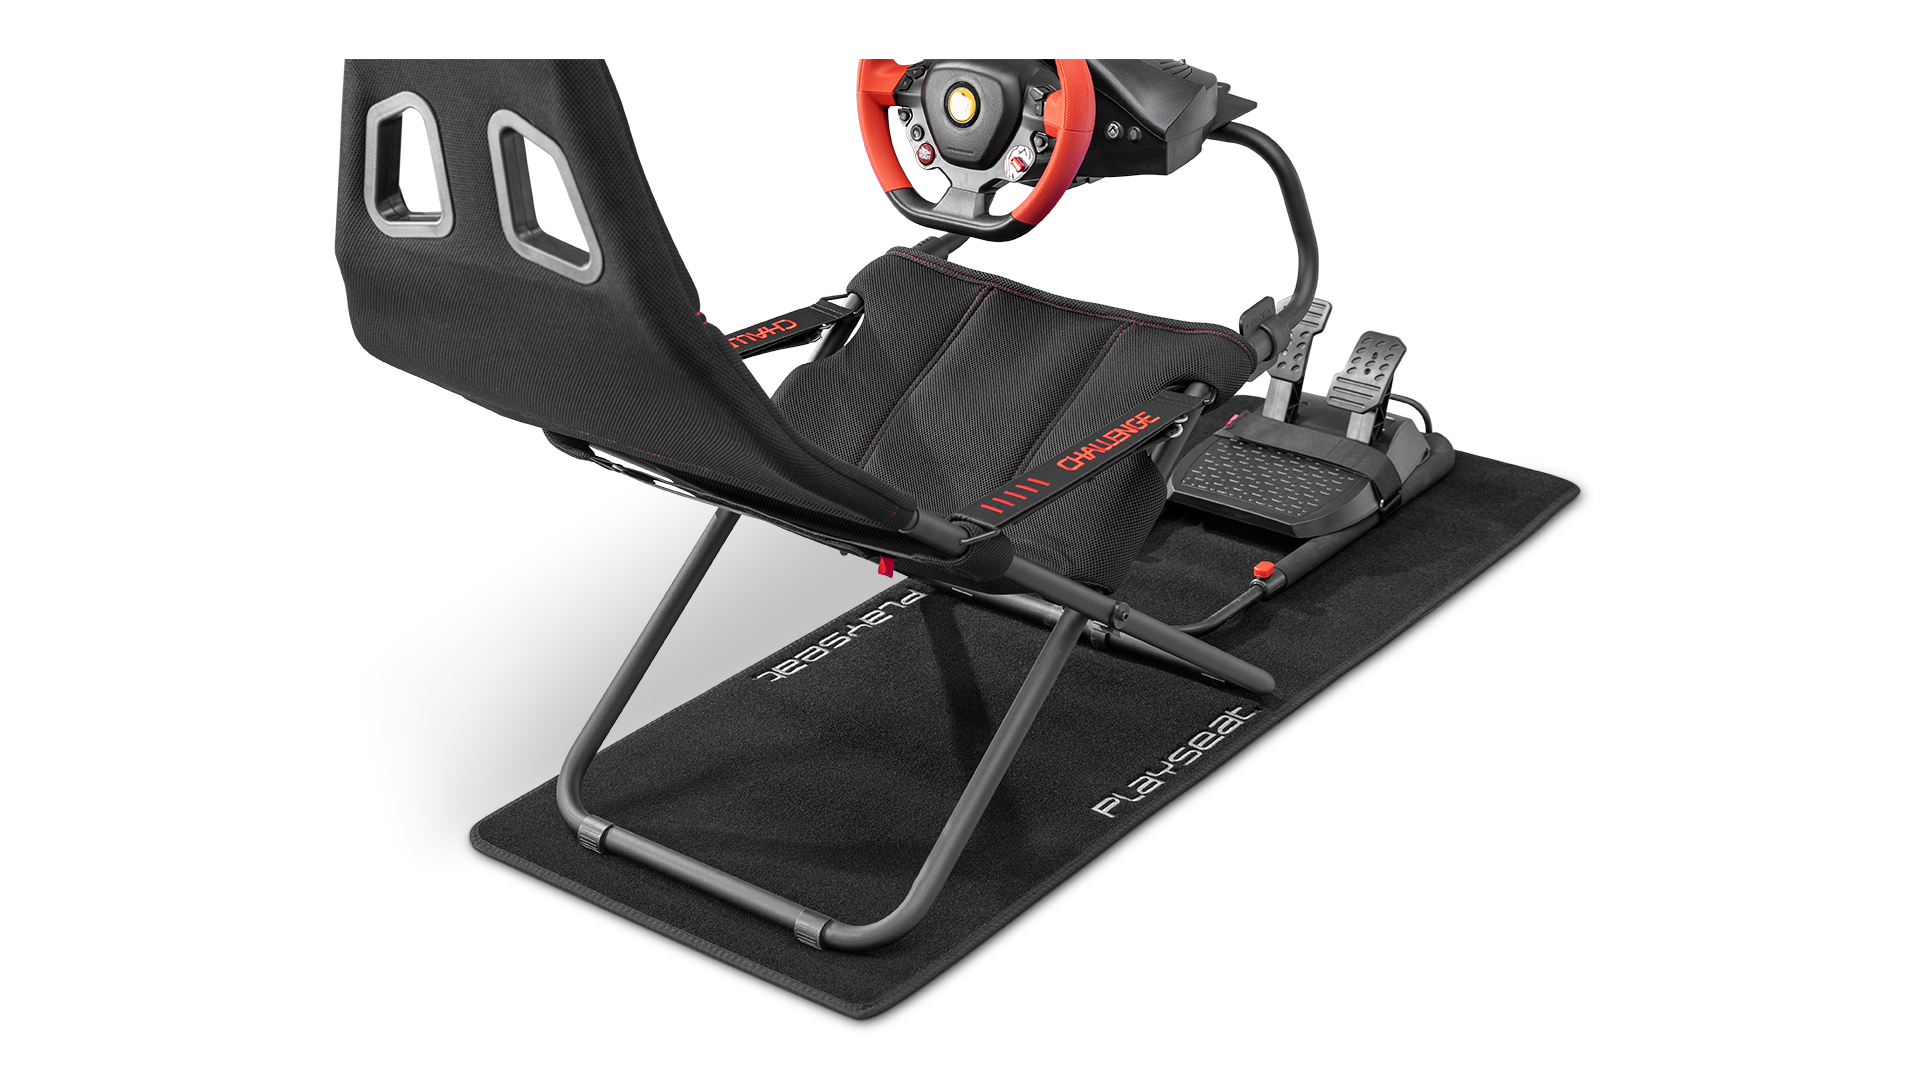 Playseat Challenge ActiFit Racing Chair